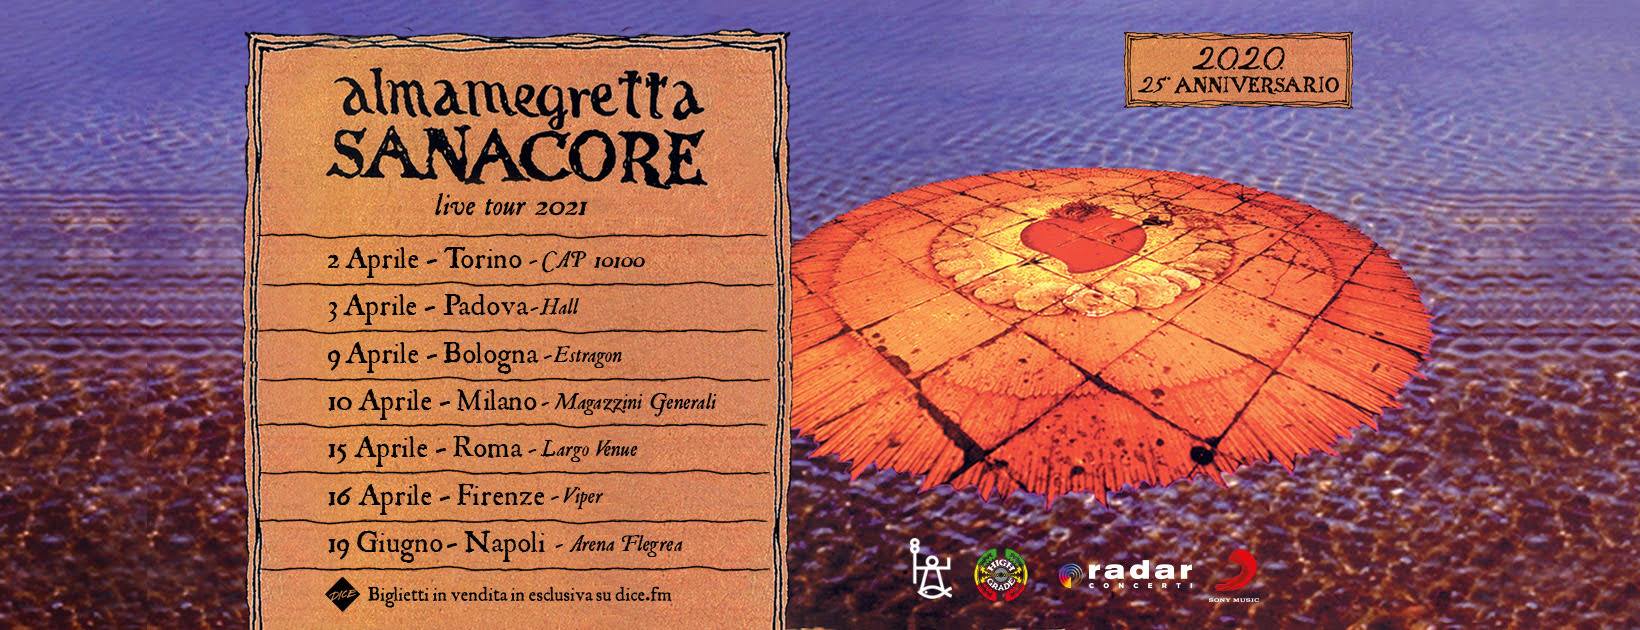 Almamegretta, Sanacore live tour 2021, Magazzini Generali Milano